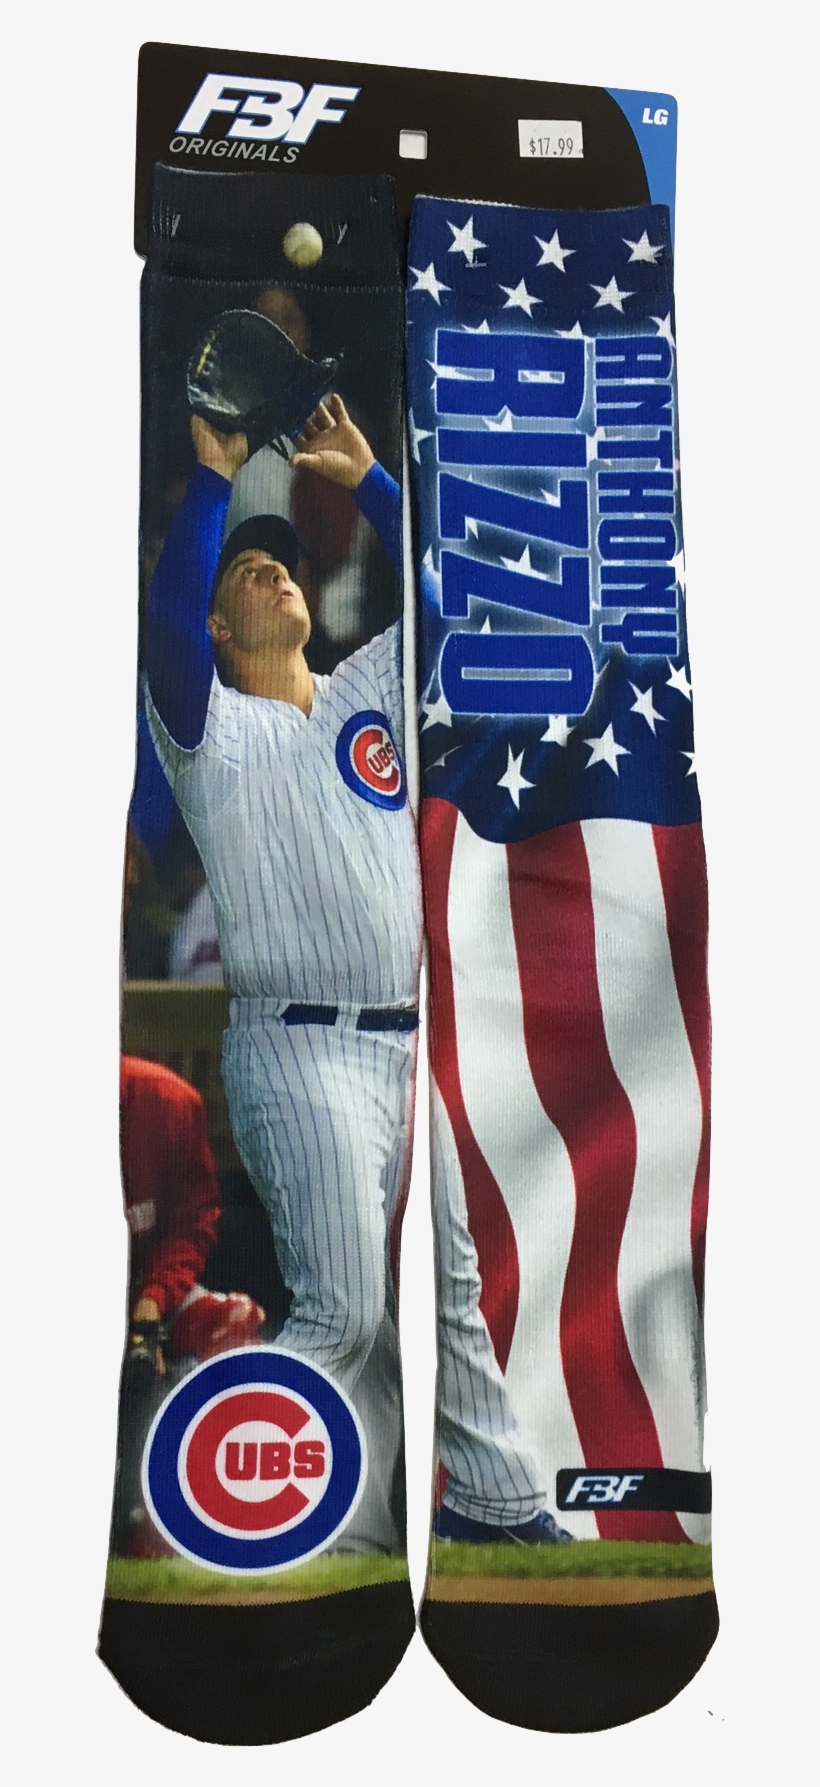 Officially Licensed Mlb Stars And Stipes Men's Socks - Chicago Cubs, transparent png #2210991